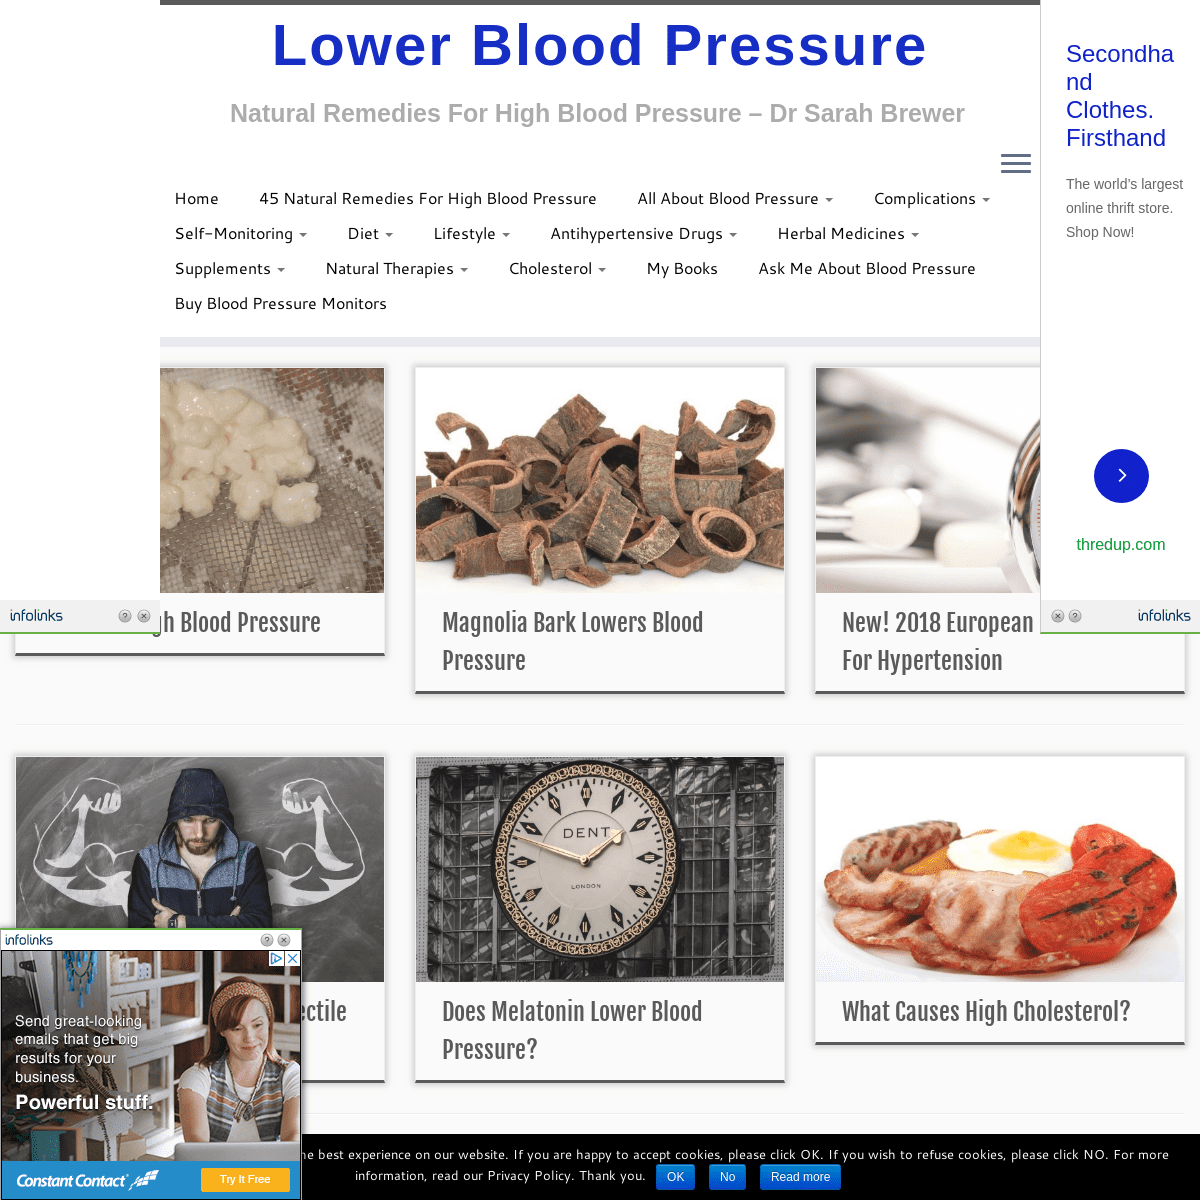 Lower Blood Pressure - Dr Sarah Brewer